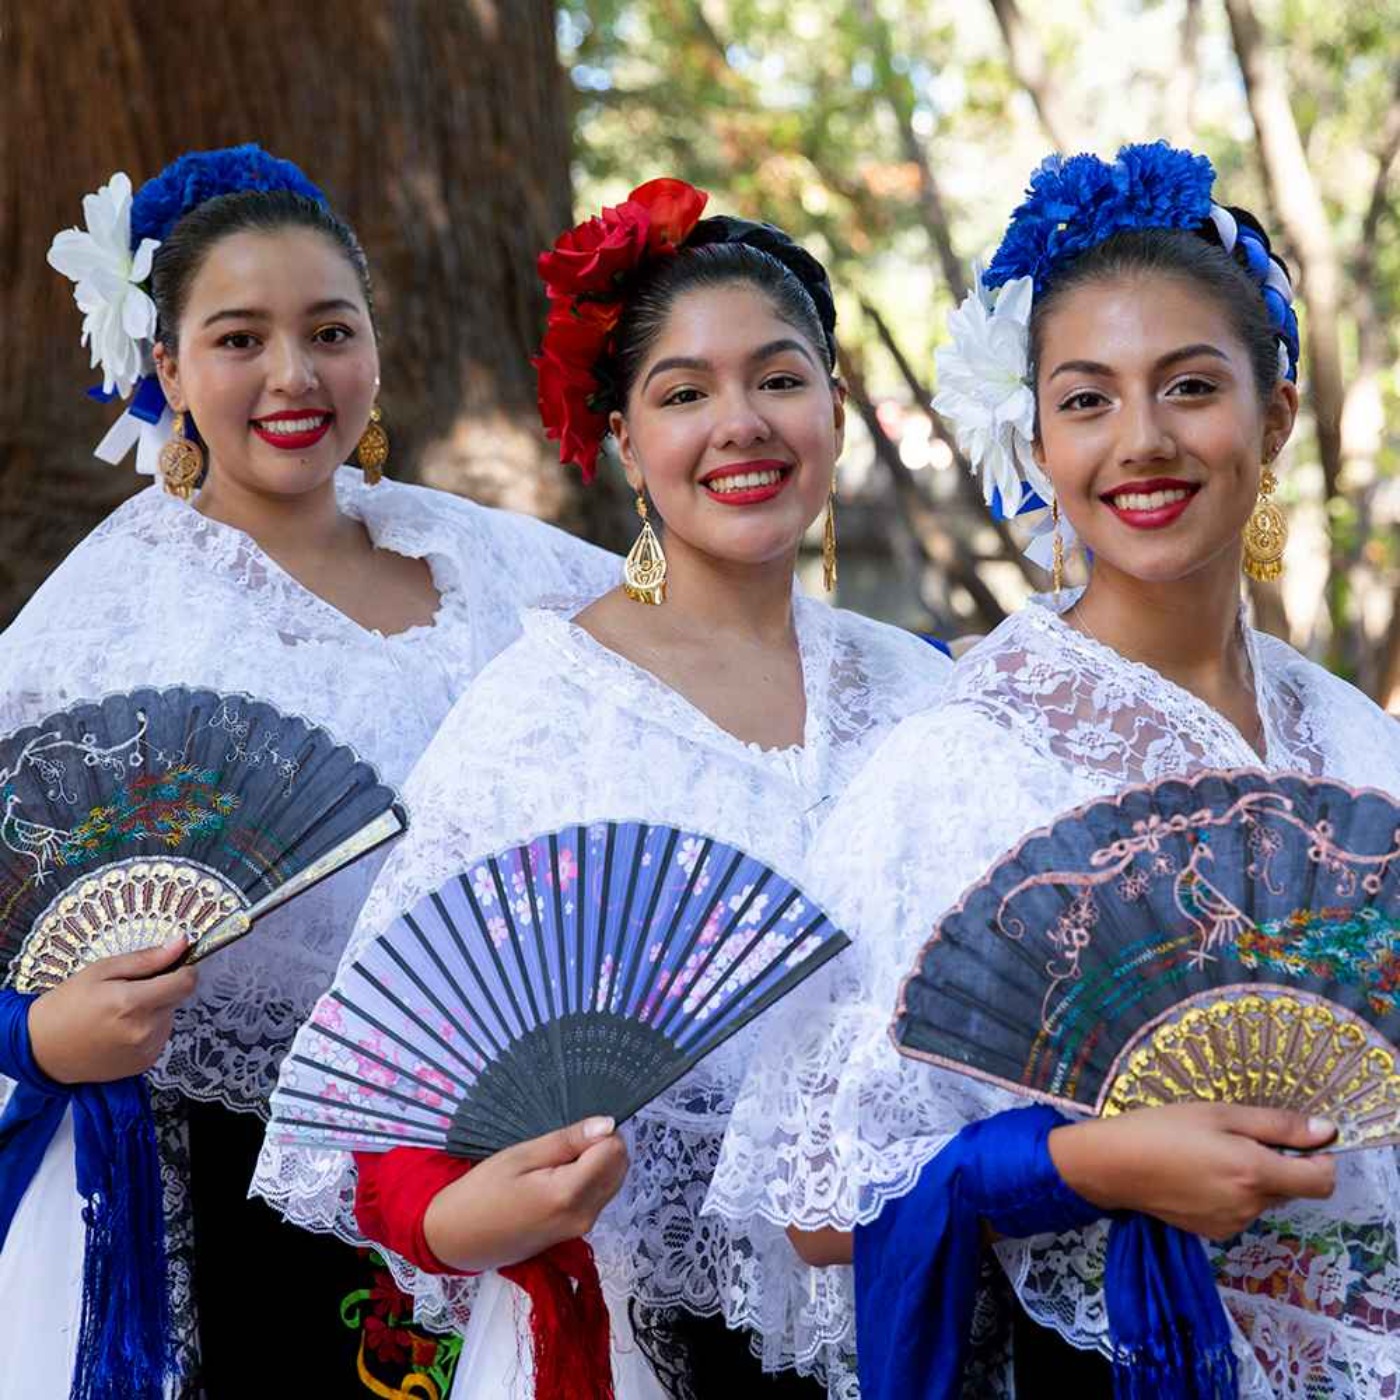 85: Ballet folklórico: Celebrating Mexican culture through dance